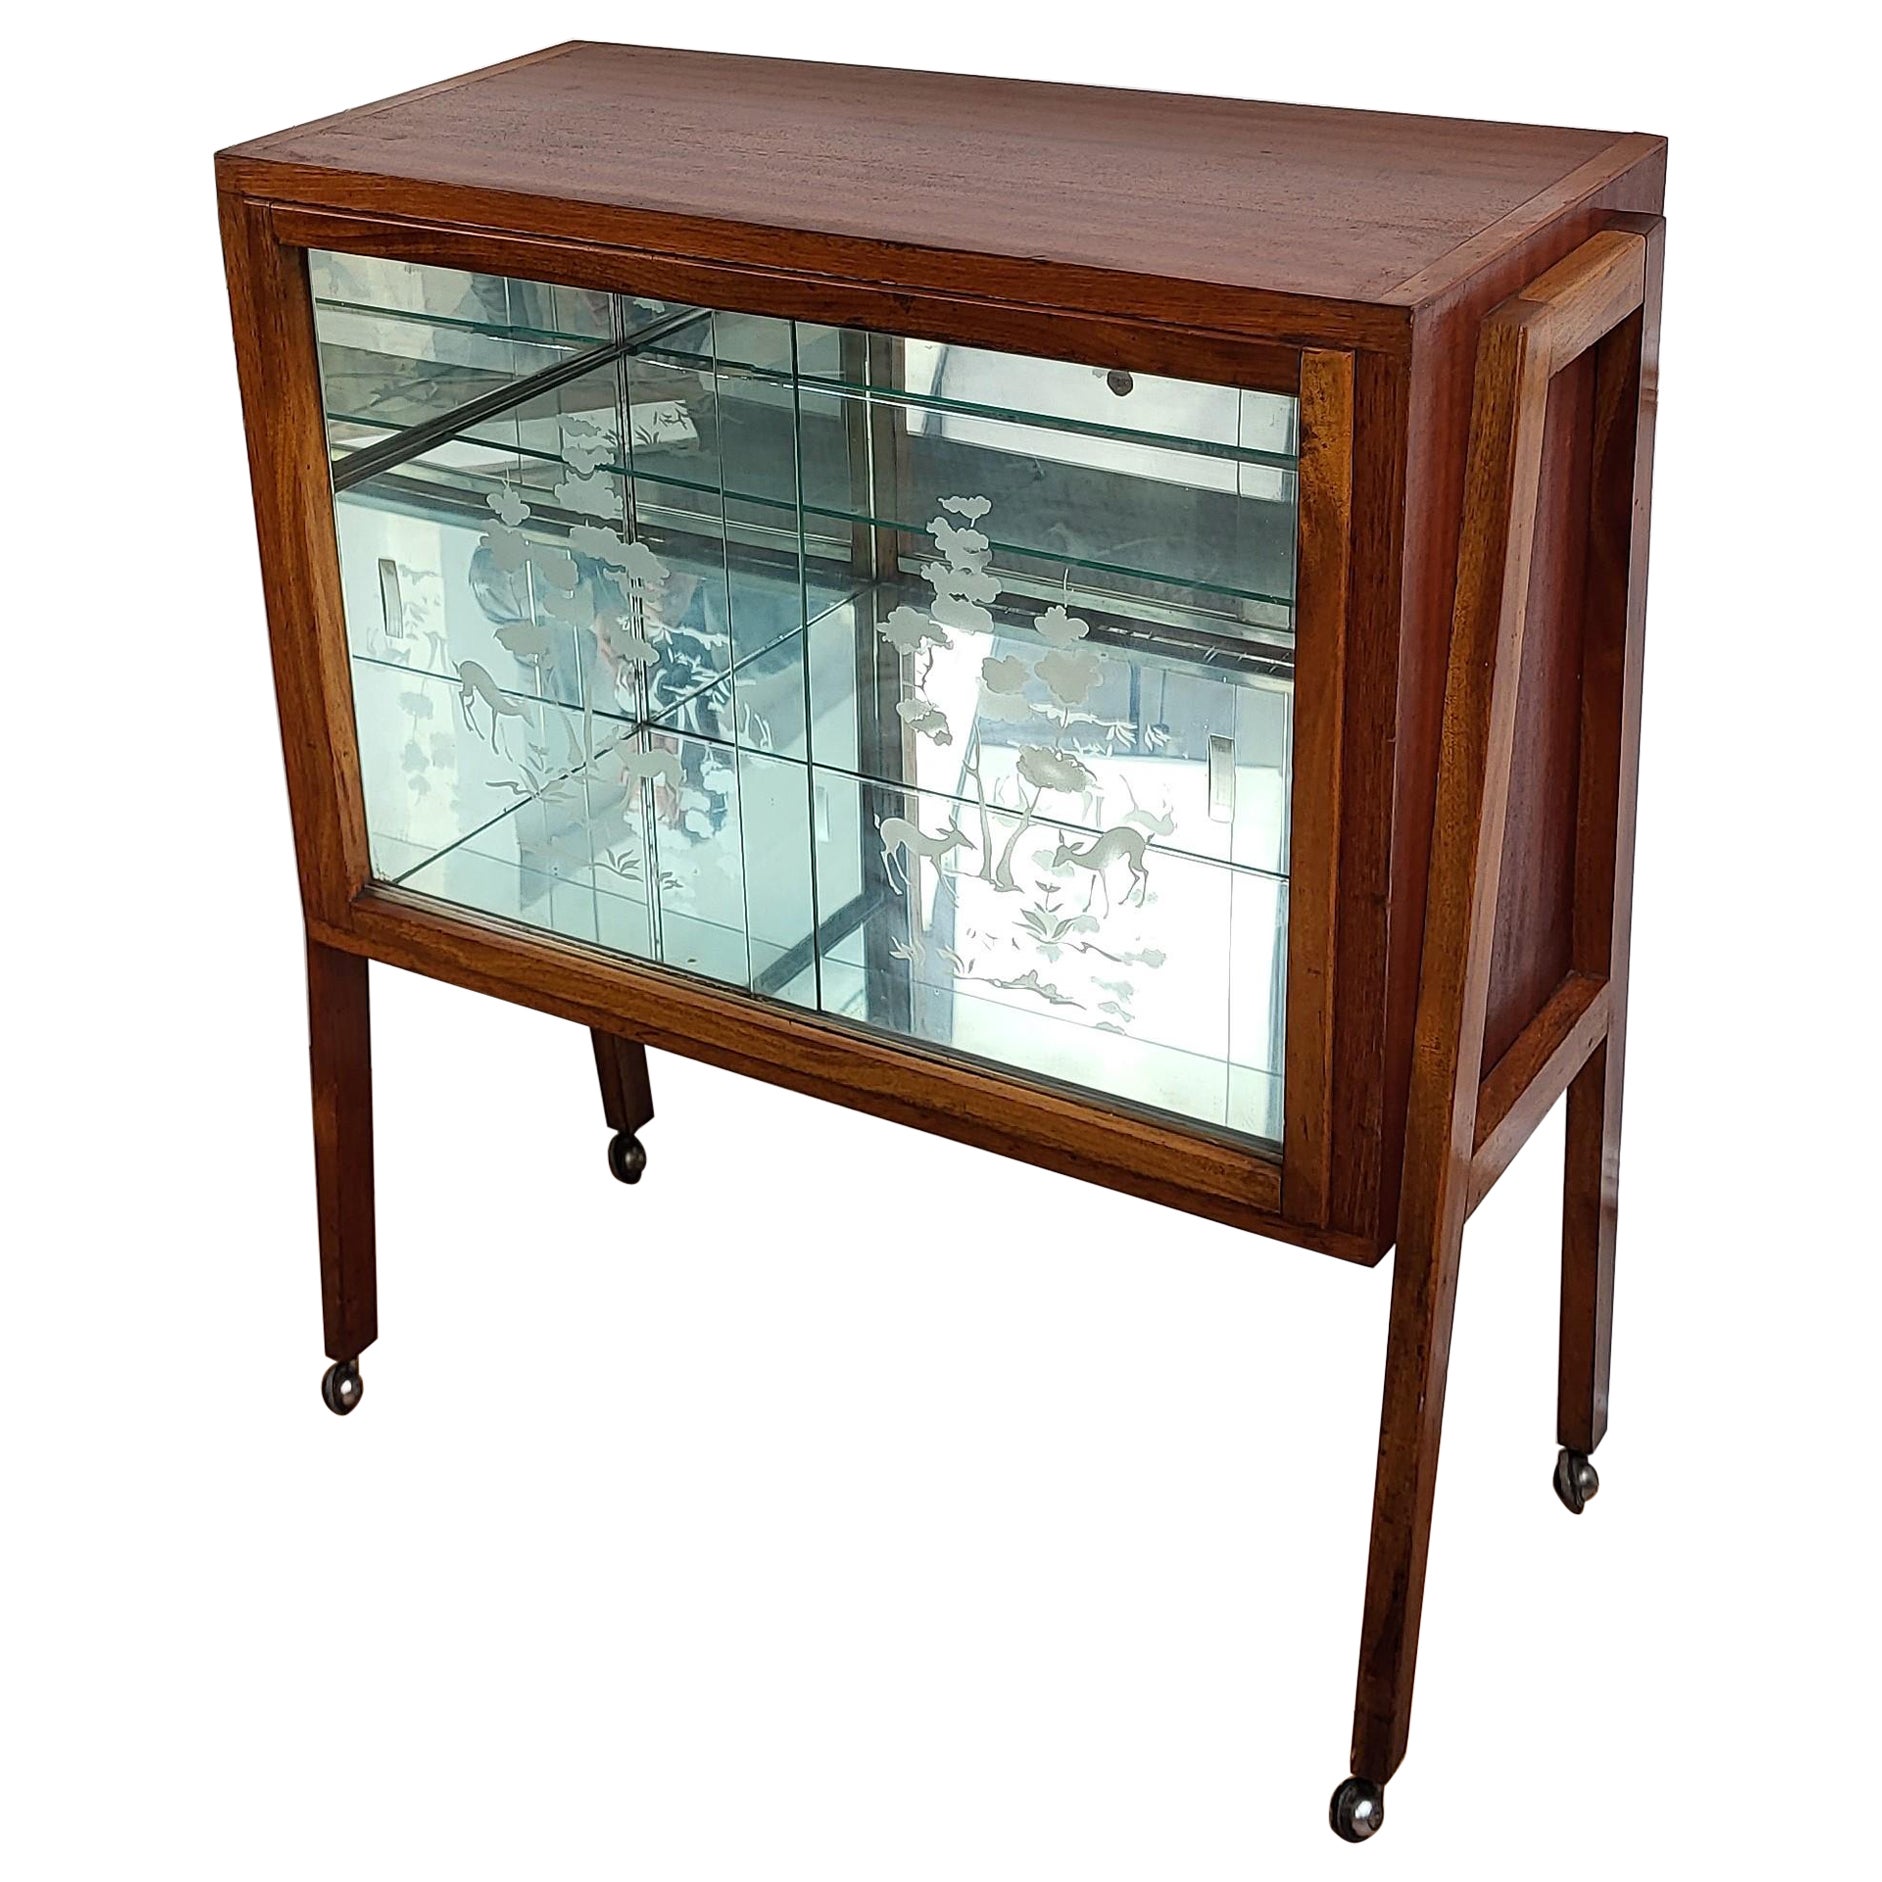 1950s Italian Art Deco Midcentury Regency Wood and Mirror Dry Bar Cabinet Cart